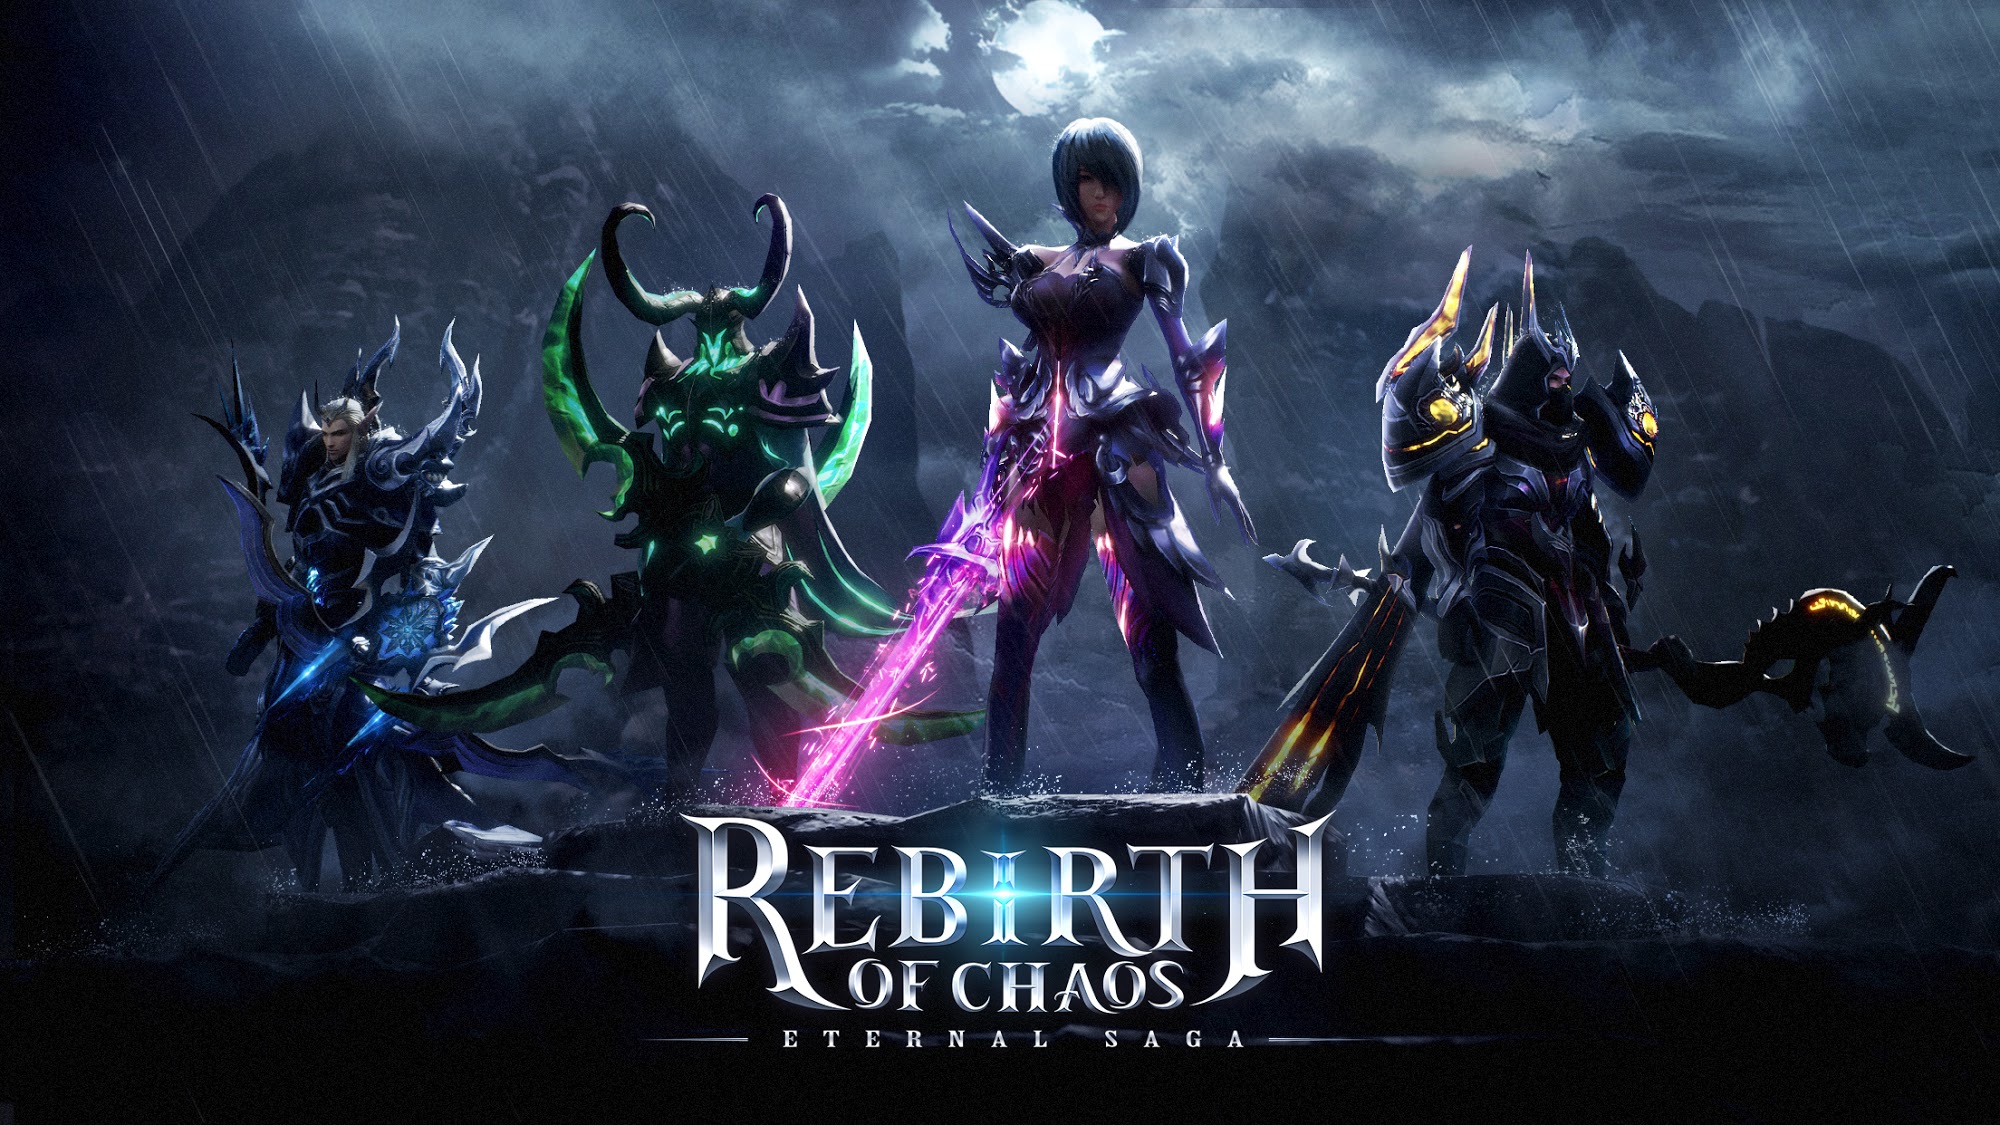 Scarica Rebirth of Chaos: Eternal saga gratis per Android.